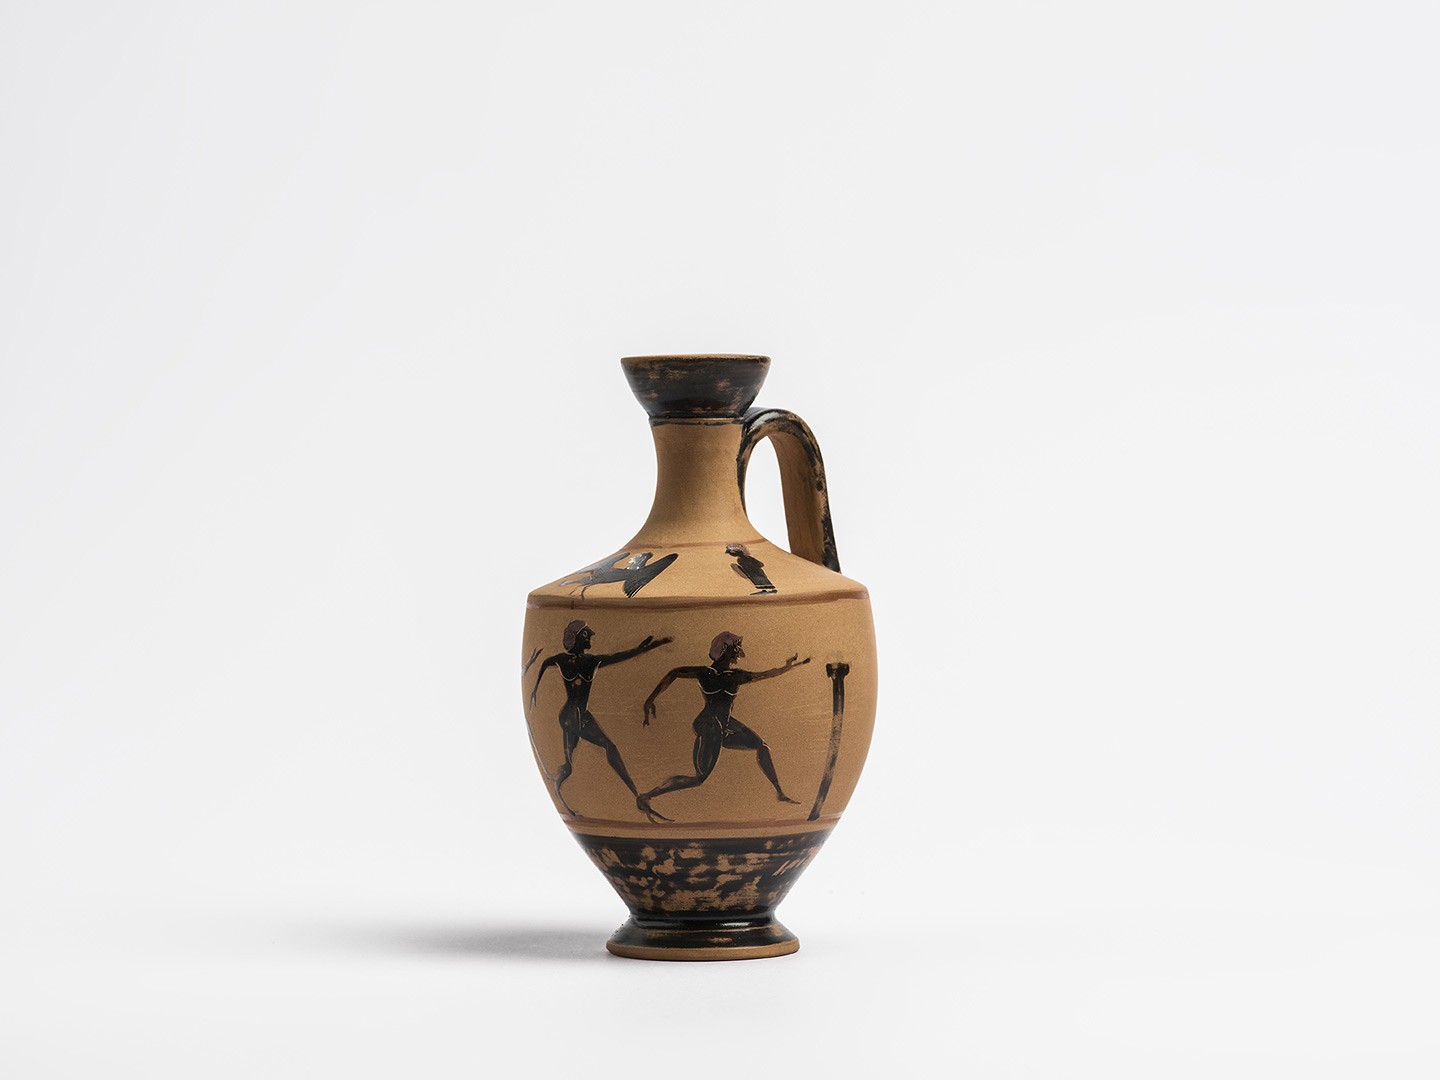 Type of perfume vase or black figured lekythos